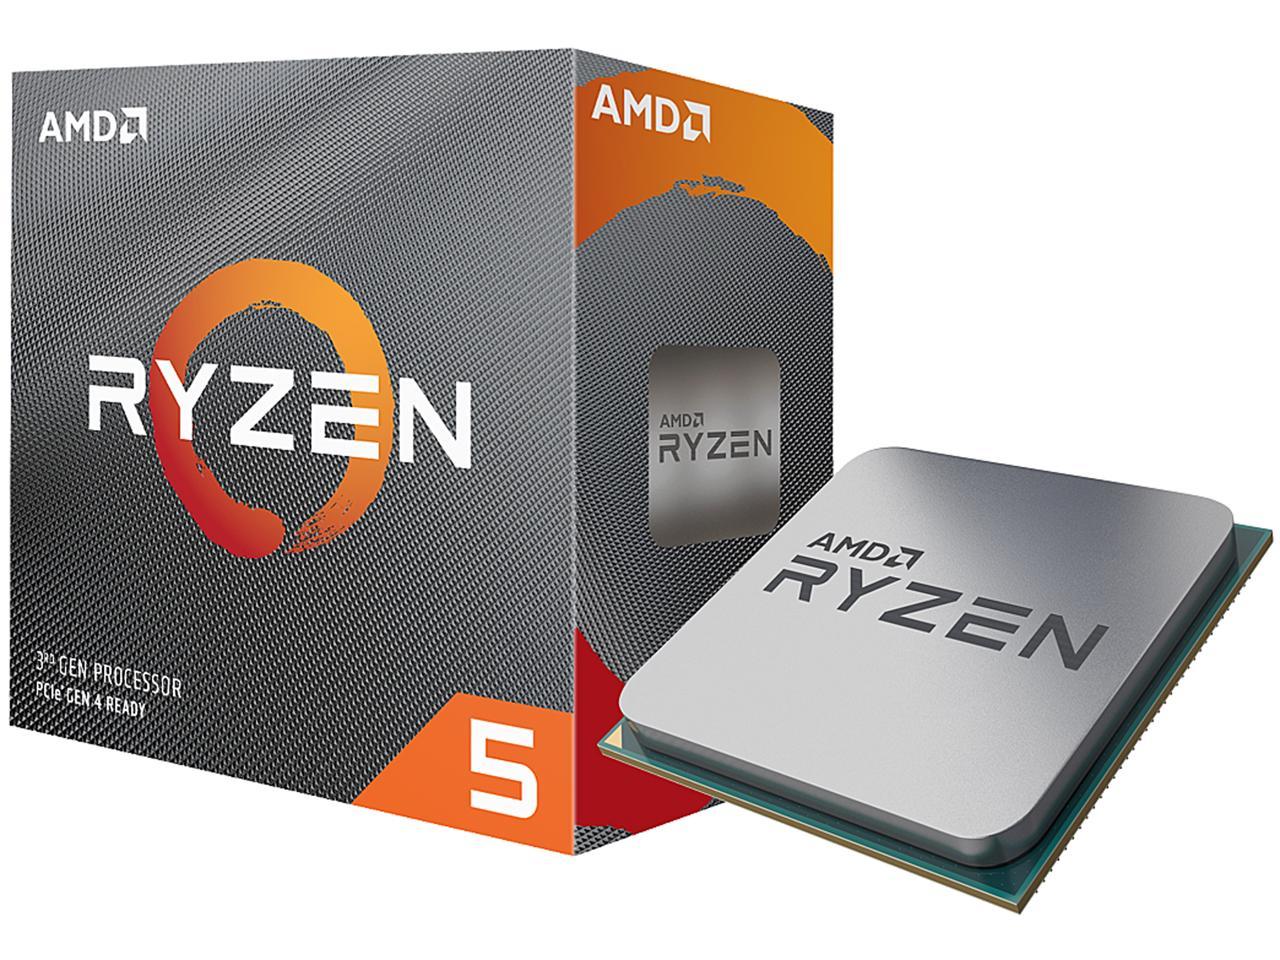 AMD RYZEN 5 3600 6-Core 3.6 GHz CPU Processor - Newegg.com